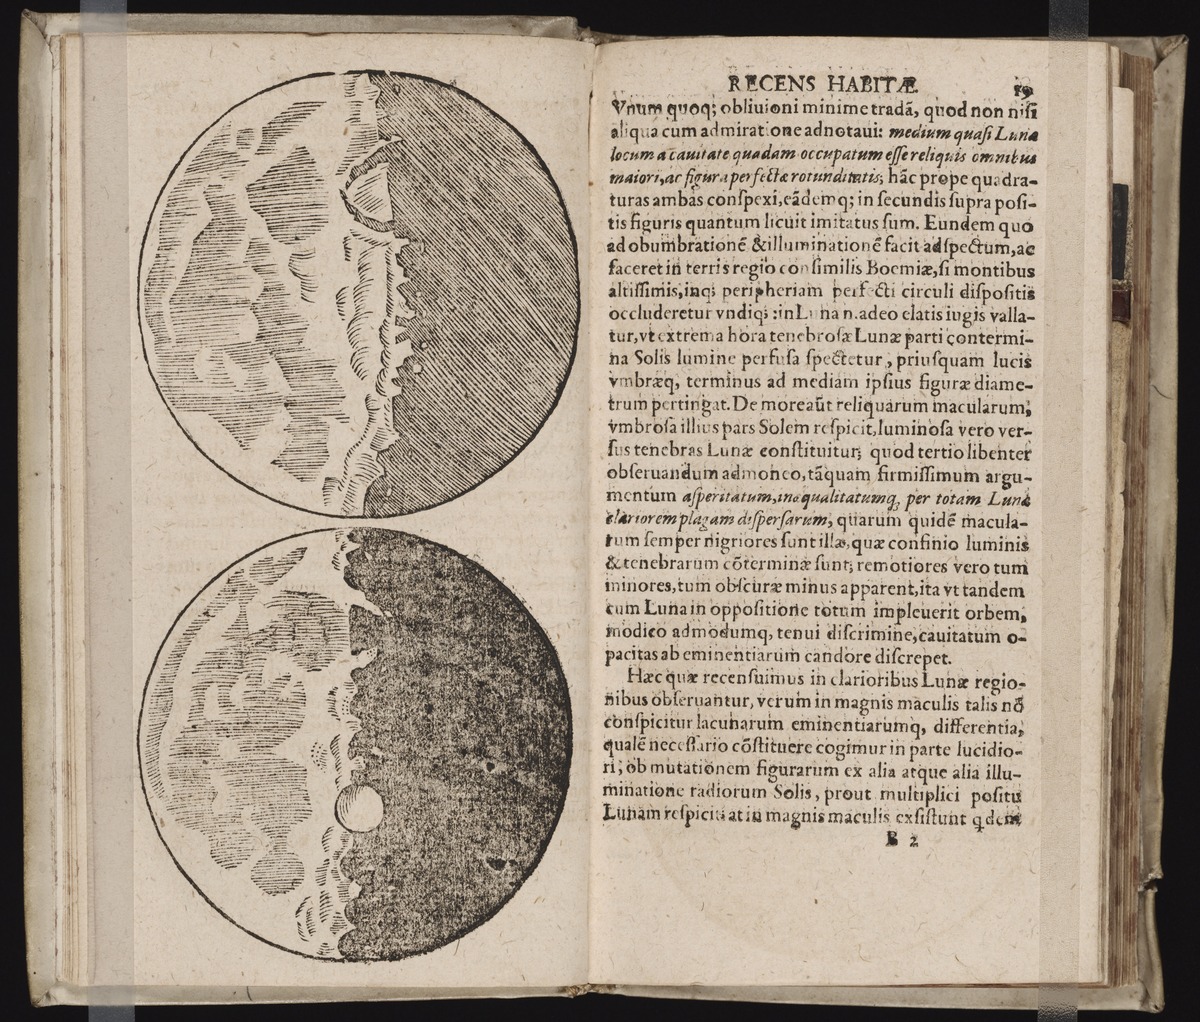 Siderevs nvncivs, magna, longeqve admirabilia spectacula pandens ... quæ à Galileo Galileo patritio Florentino ... 1610 bit.ly/3tVsP3R